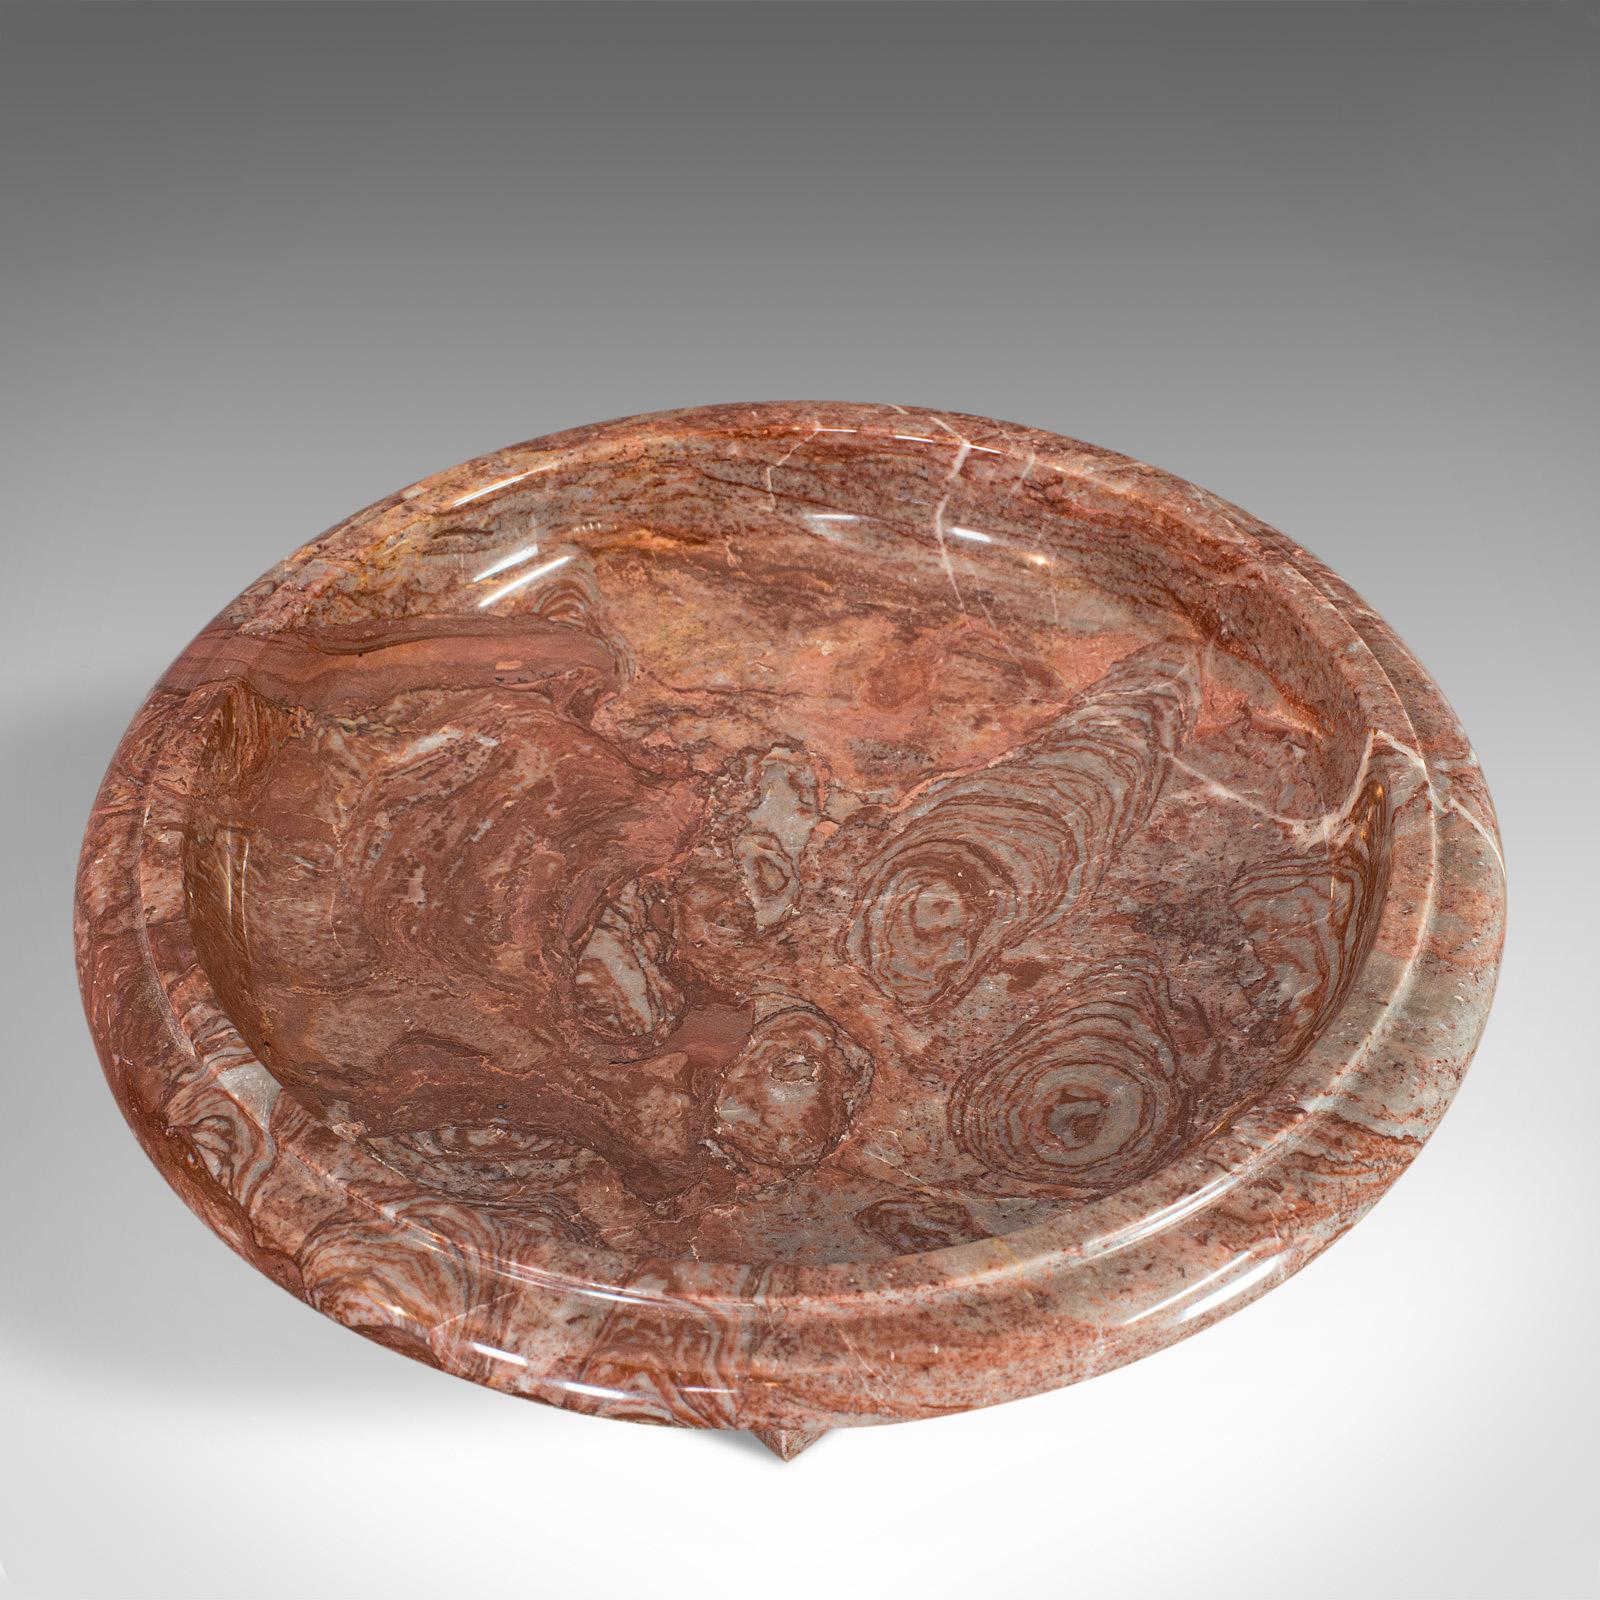 Classical Roman Vintage Marble Dish, English, Rosso Orobico, Decorative, Fruit Bowl, Jardinière